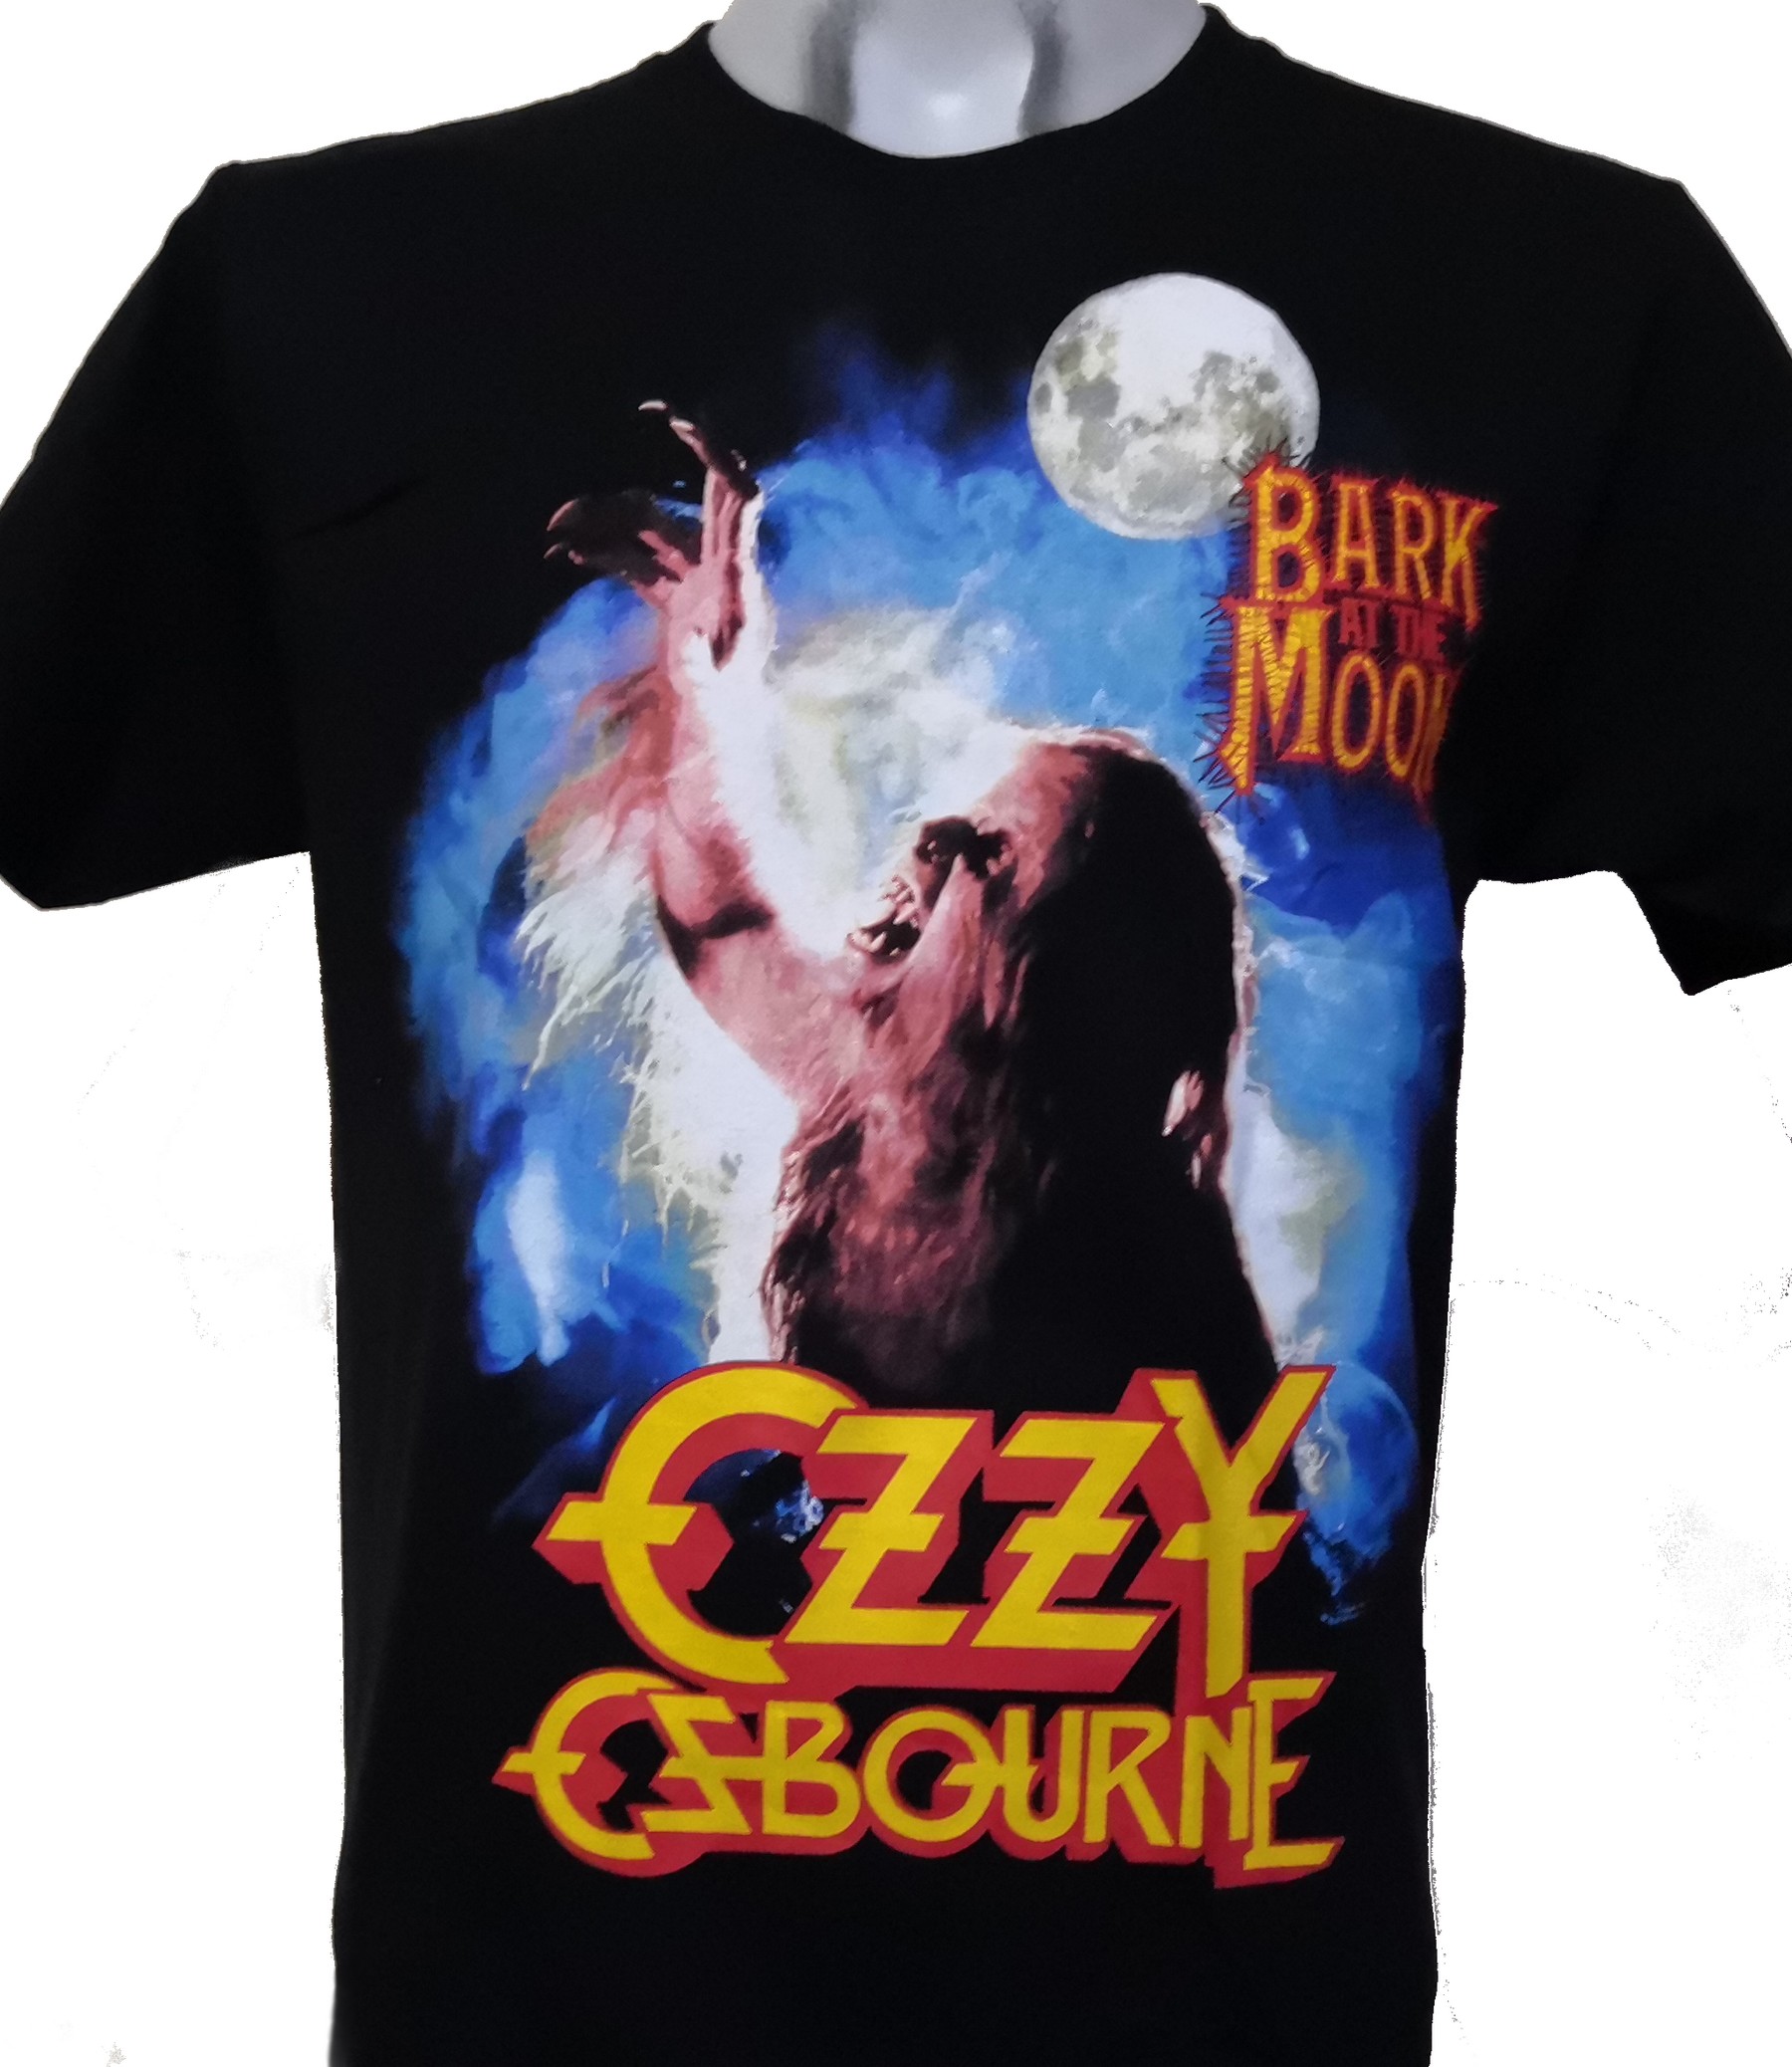 LG Black Sabbath Creature Shirt SM XL XXL New Ozzy Osbourne MD